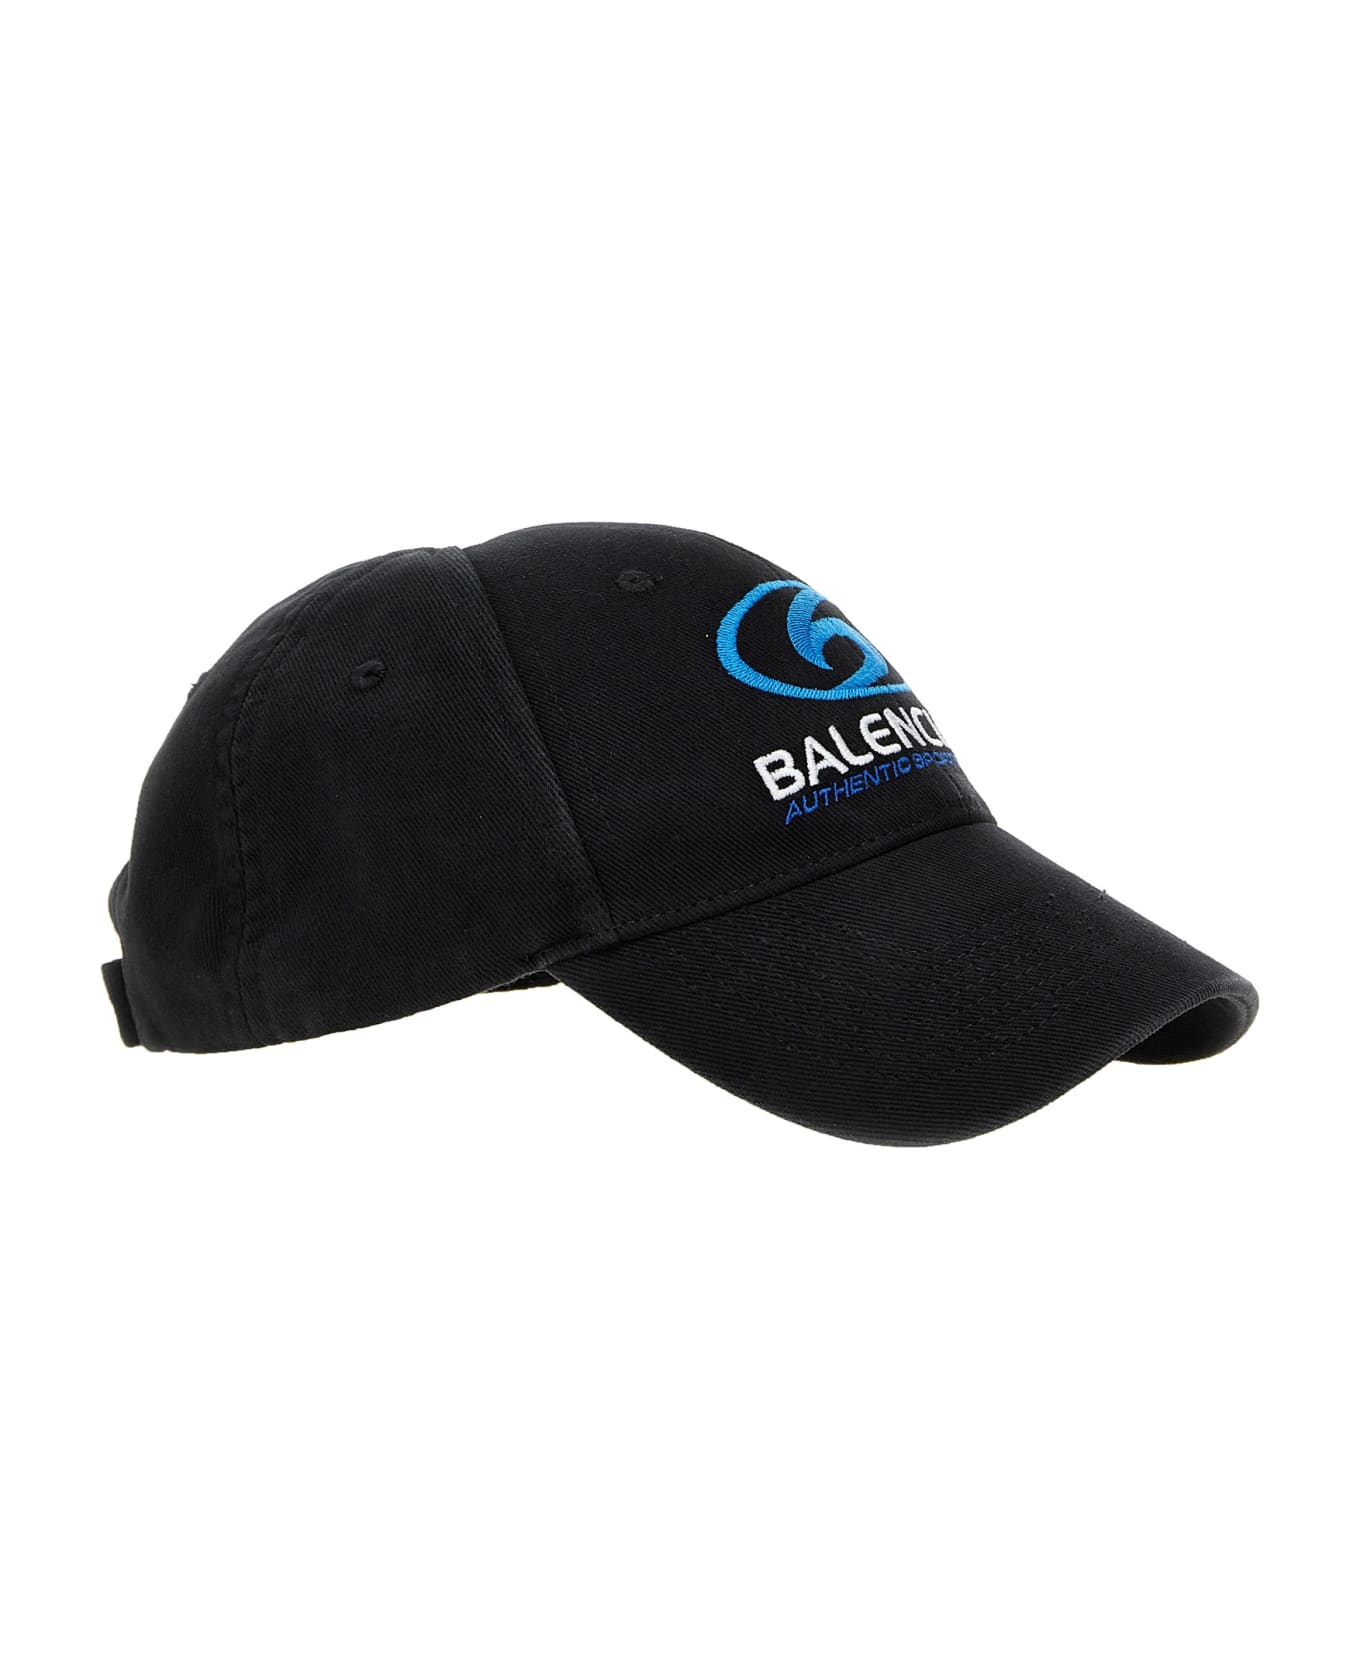 Balenciaga 'surfer' Baseball Cap - Black